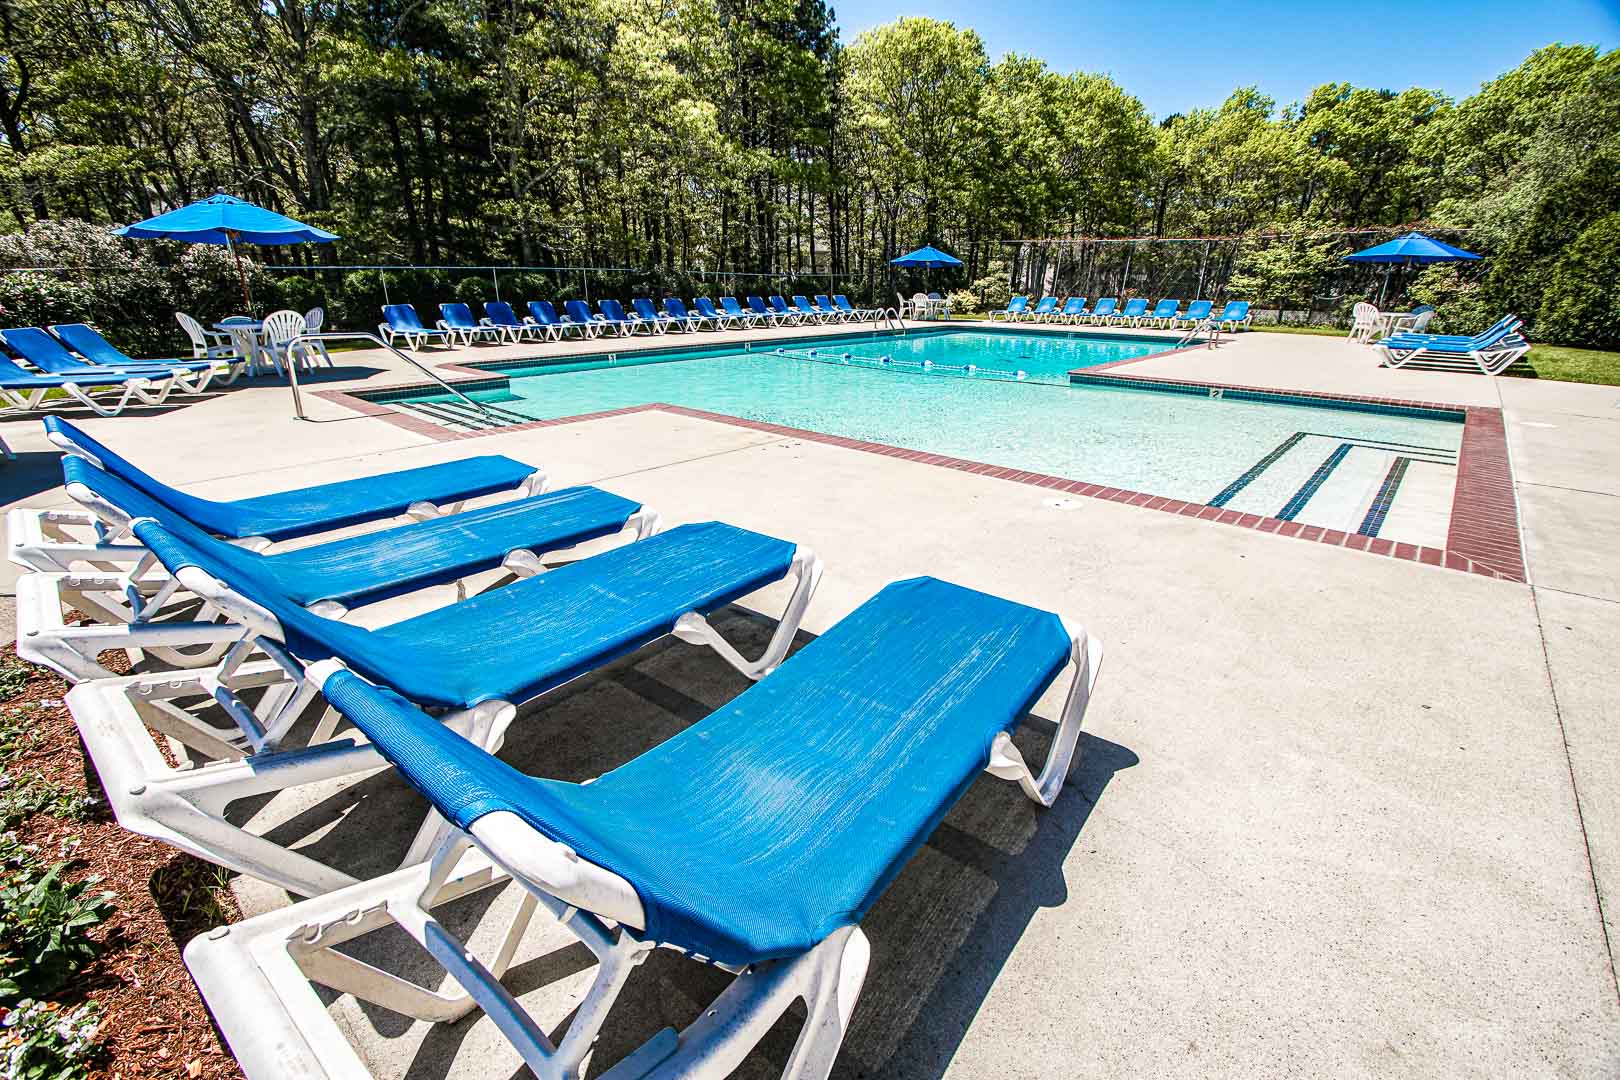 A peaceful outdoor swimming pool at VRI's Sea Mist Resort in Massachusetts.